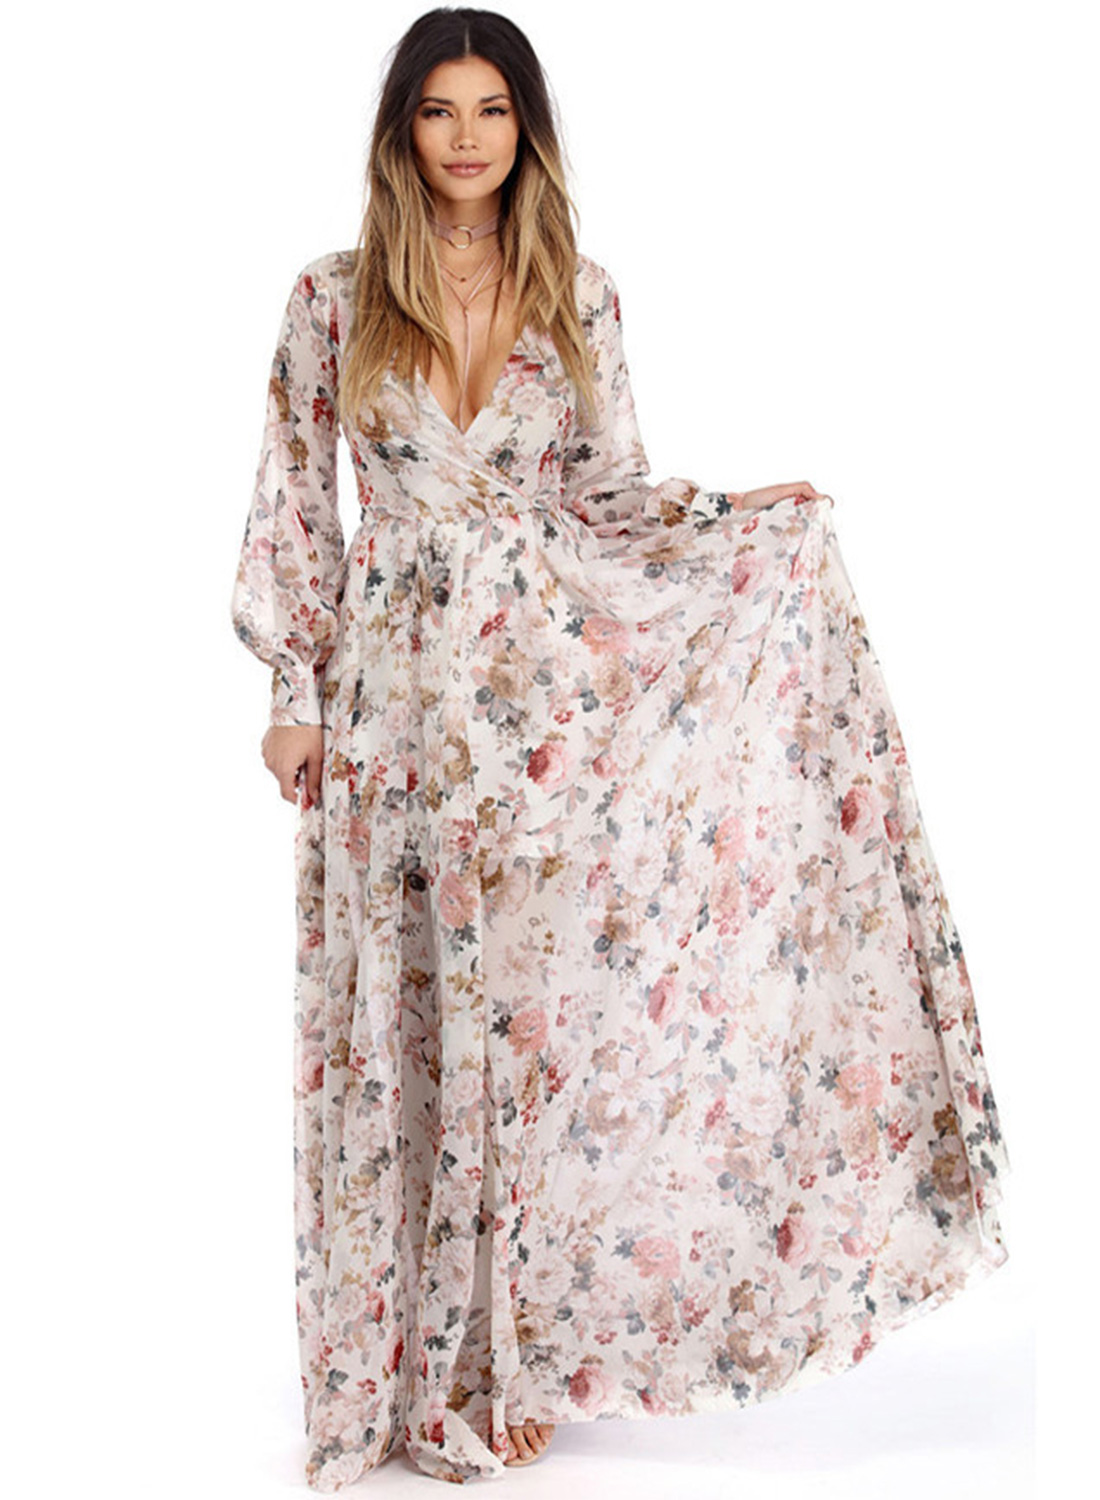 long floral dresses for women